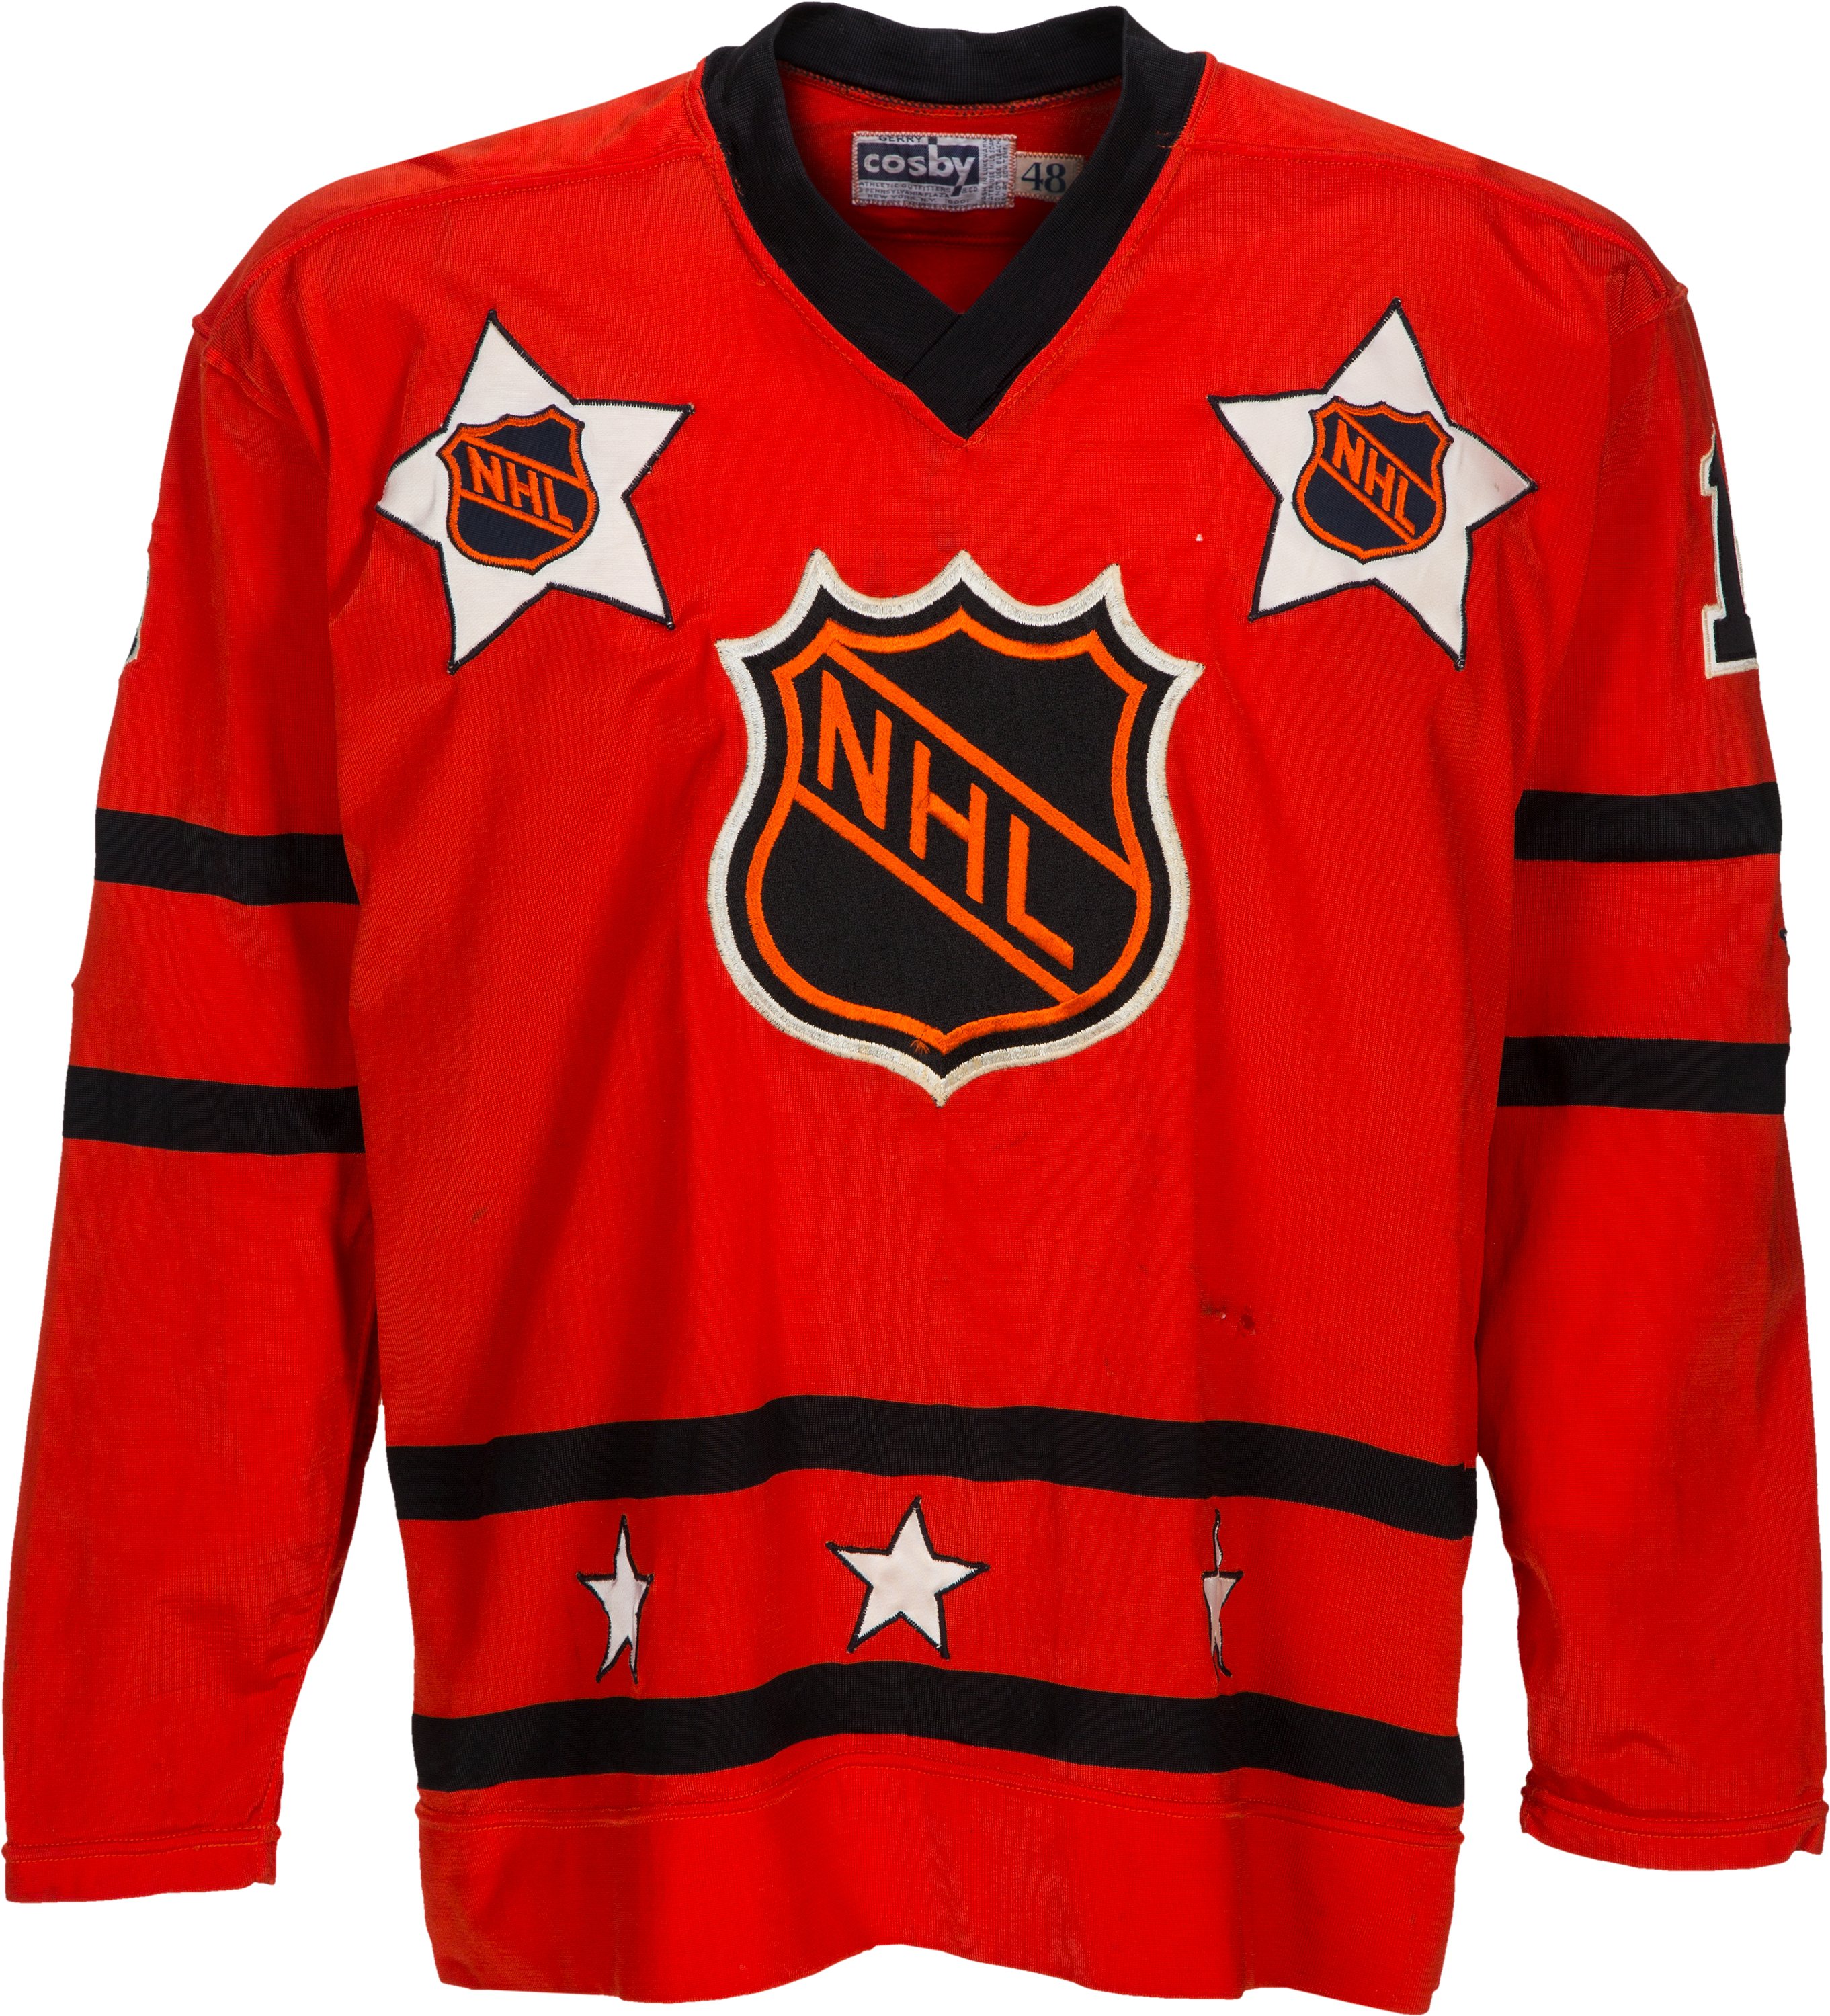 NHL says All-Star jerseys on sale at midnight